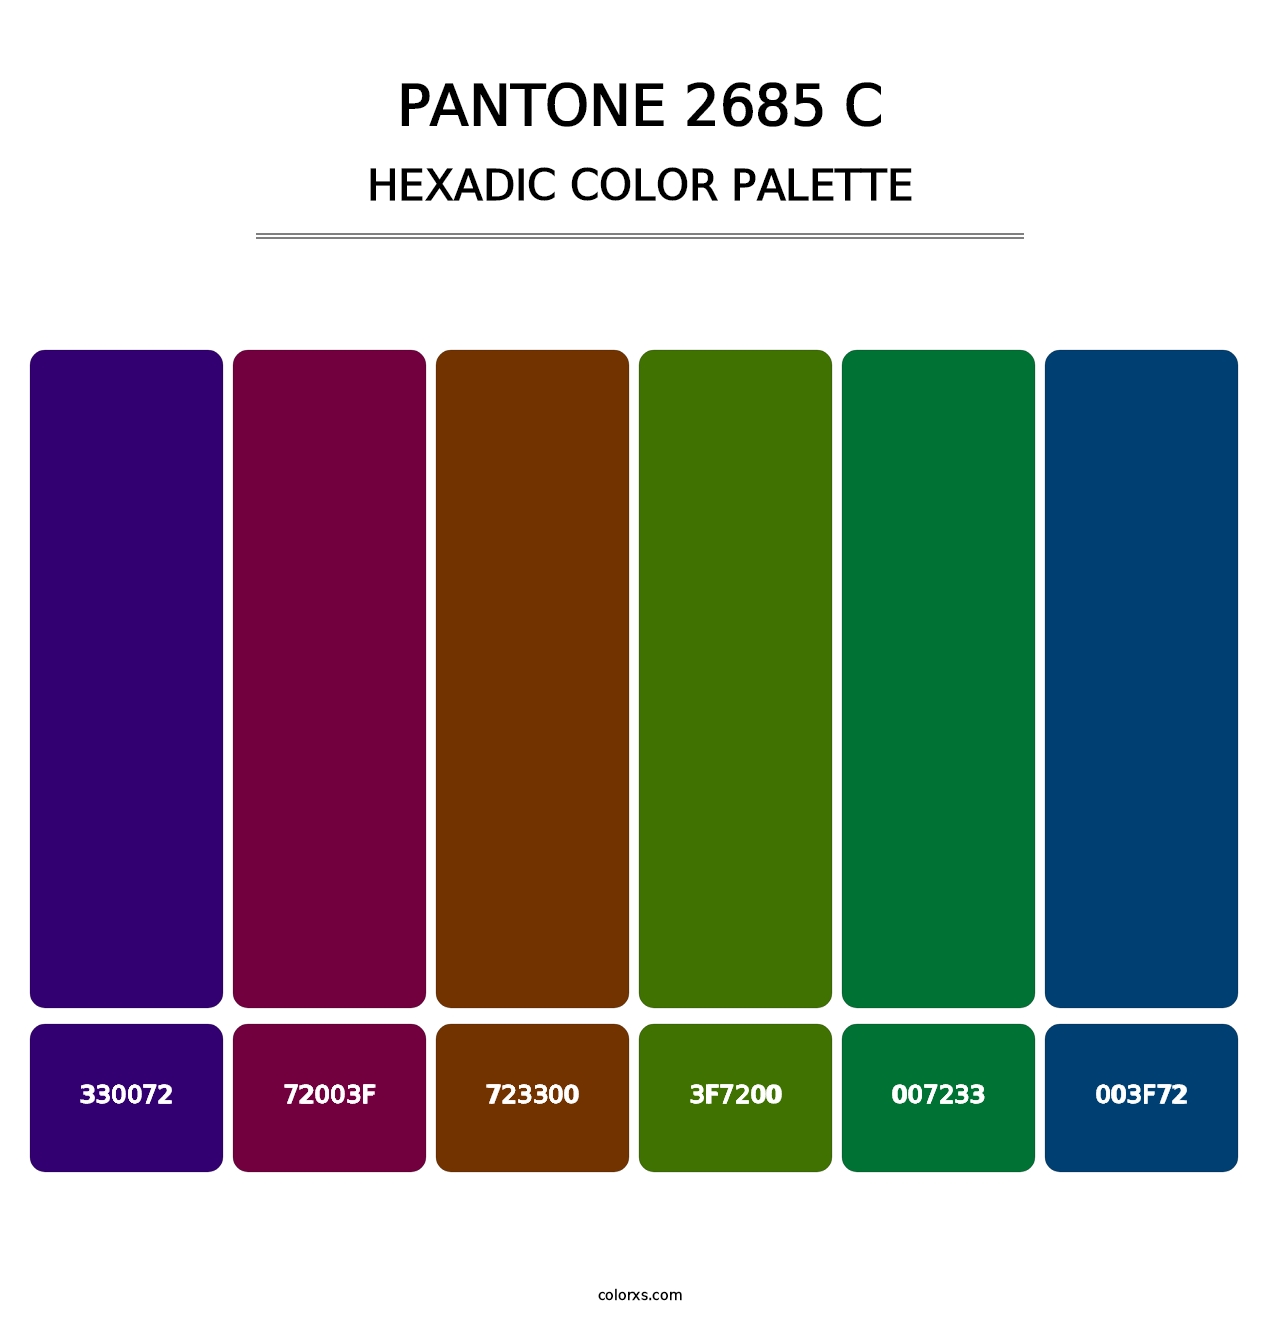 PANTONE 2685 C - Hexadic Color Palette